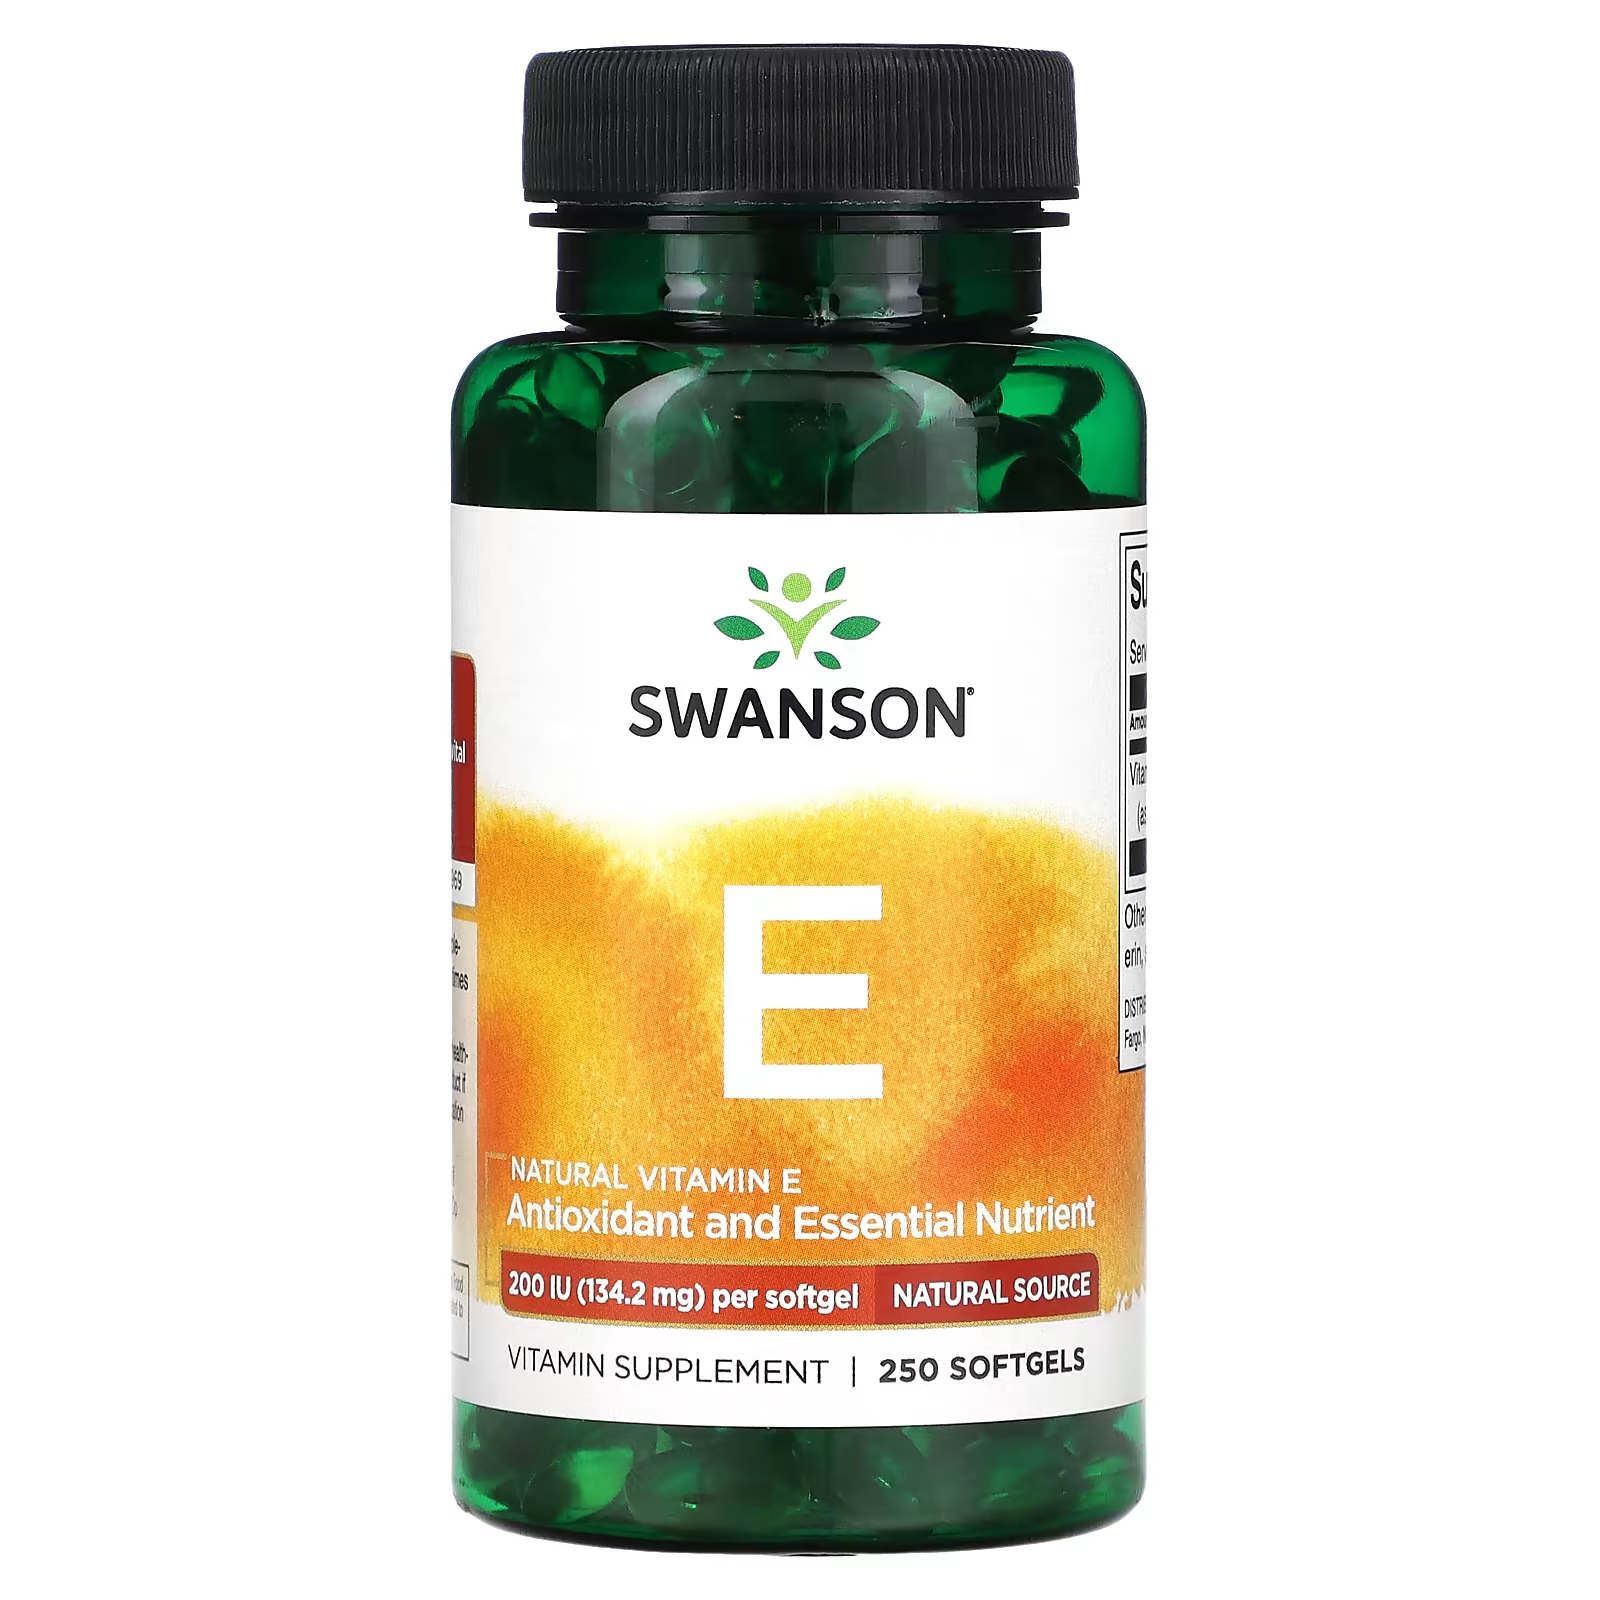 Витамин Е Swanson натуральный 200 МЕ, 134.2 мг 250 таблеток витамин е swanson натуральный 1000 ме 100 таблеток